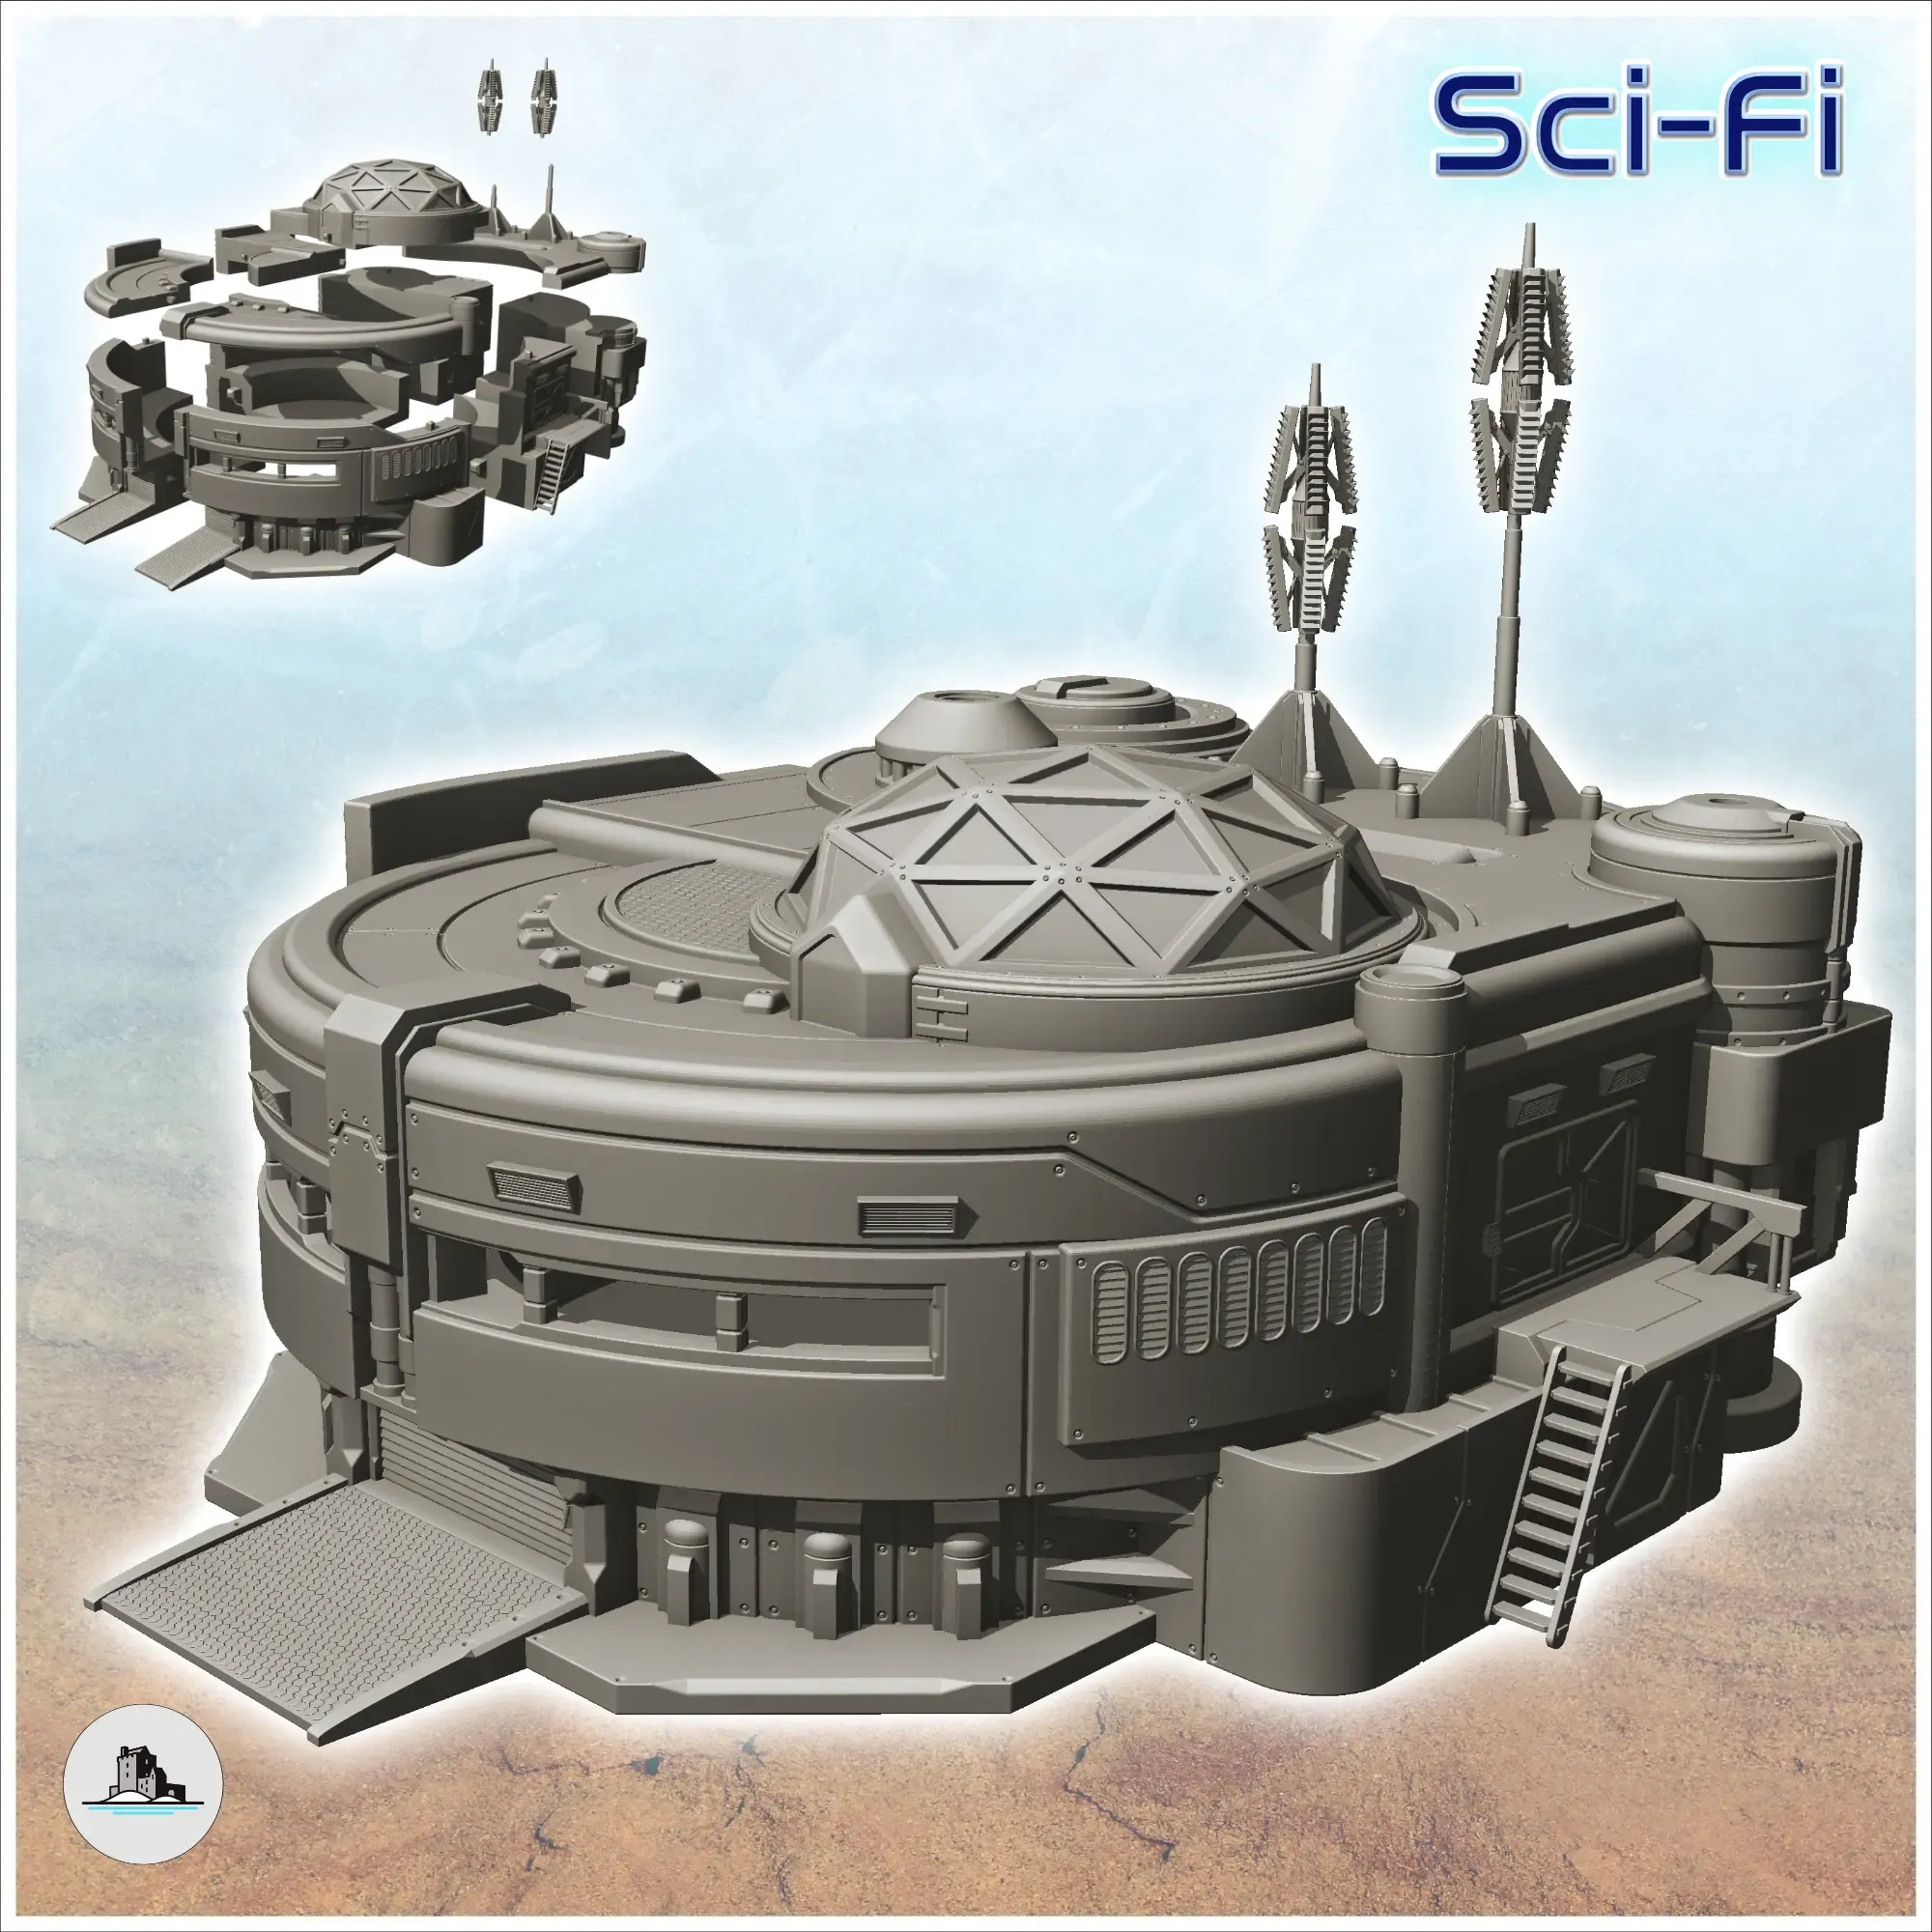 Laboratory with dome - Terrain Scifi Science fiction SF